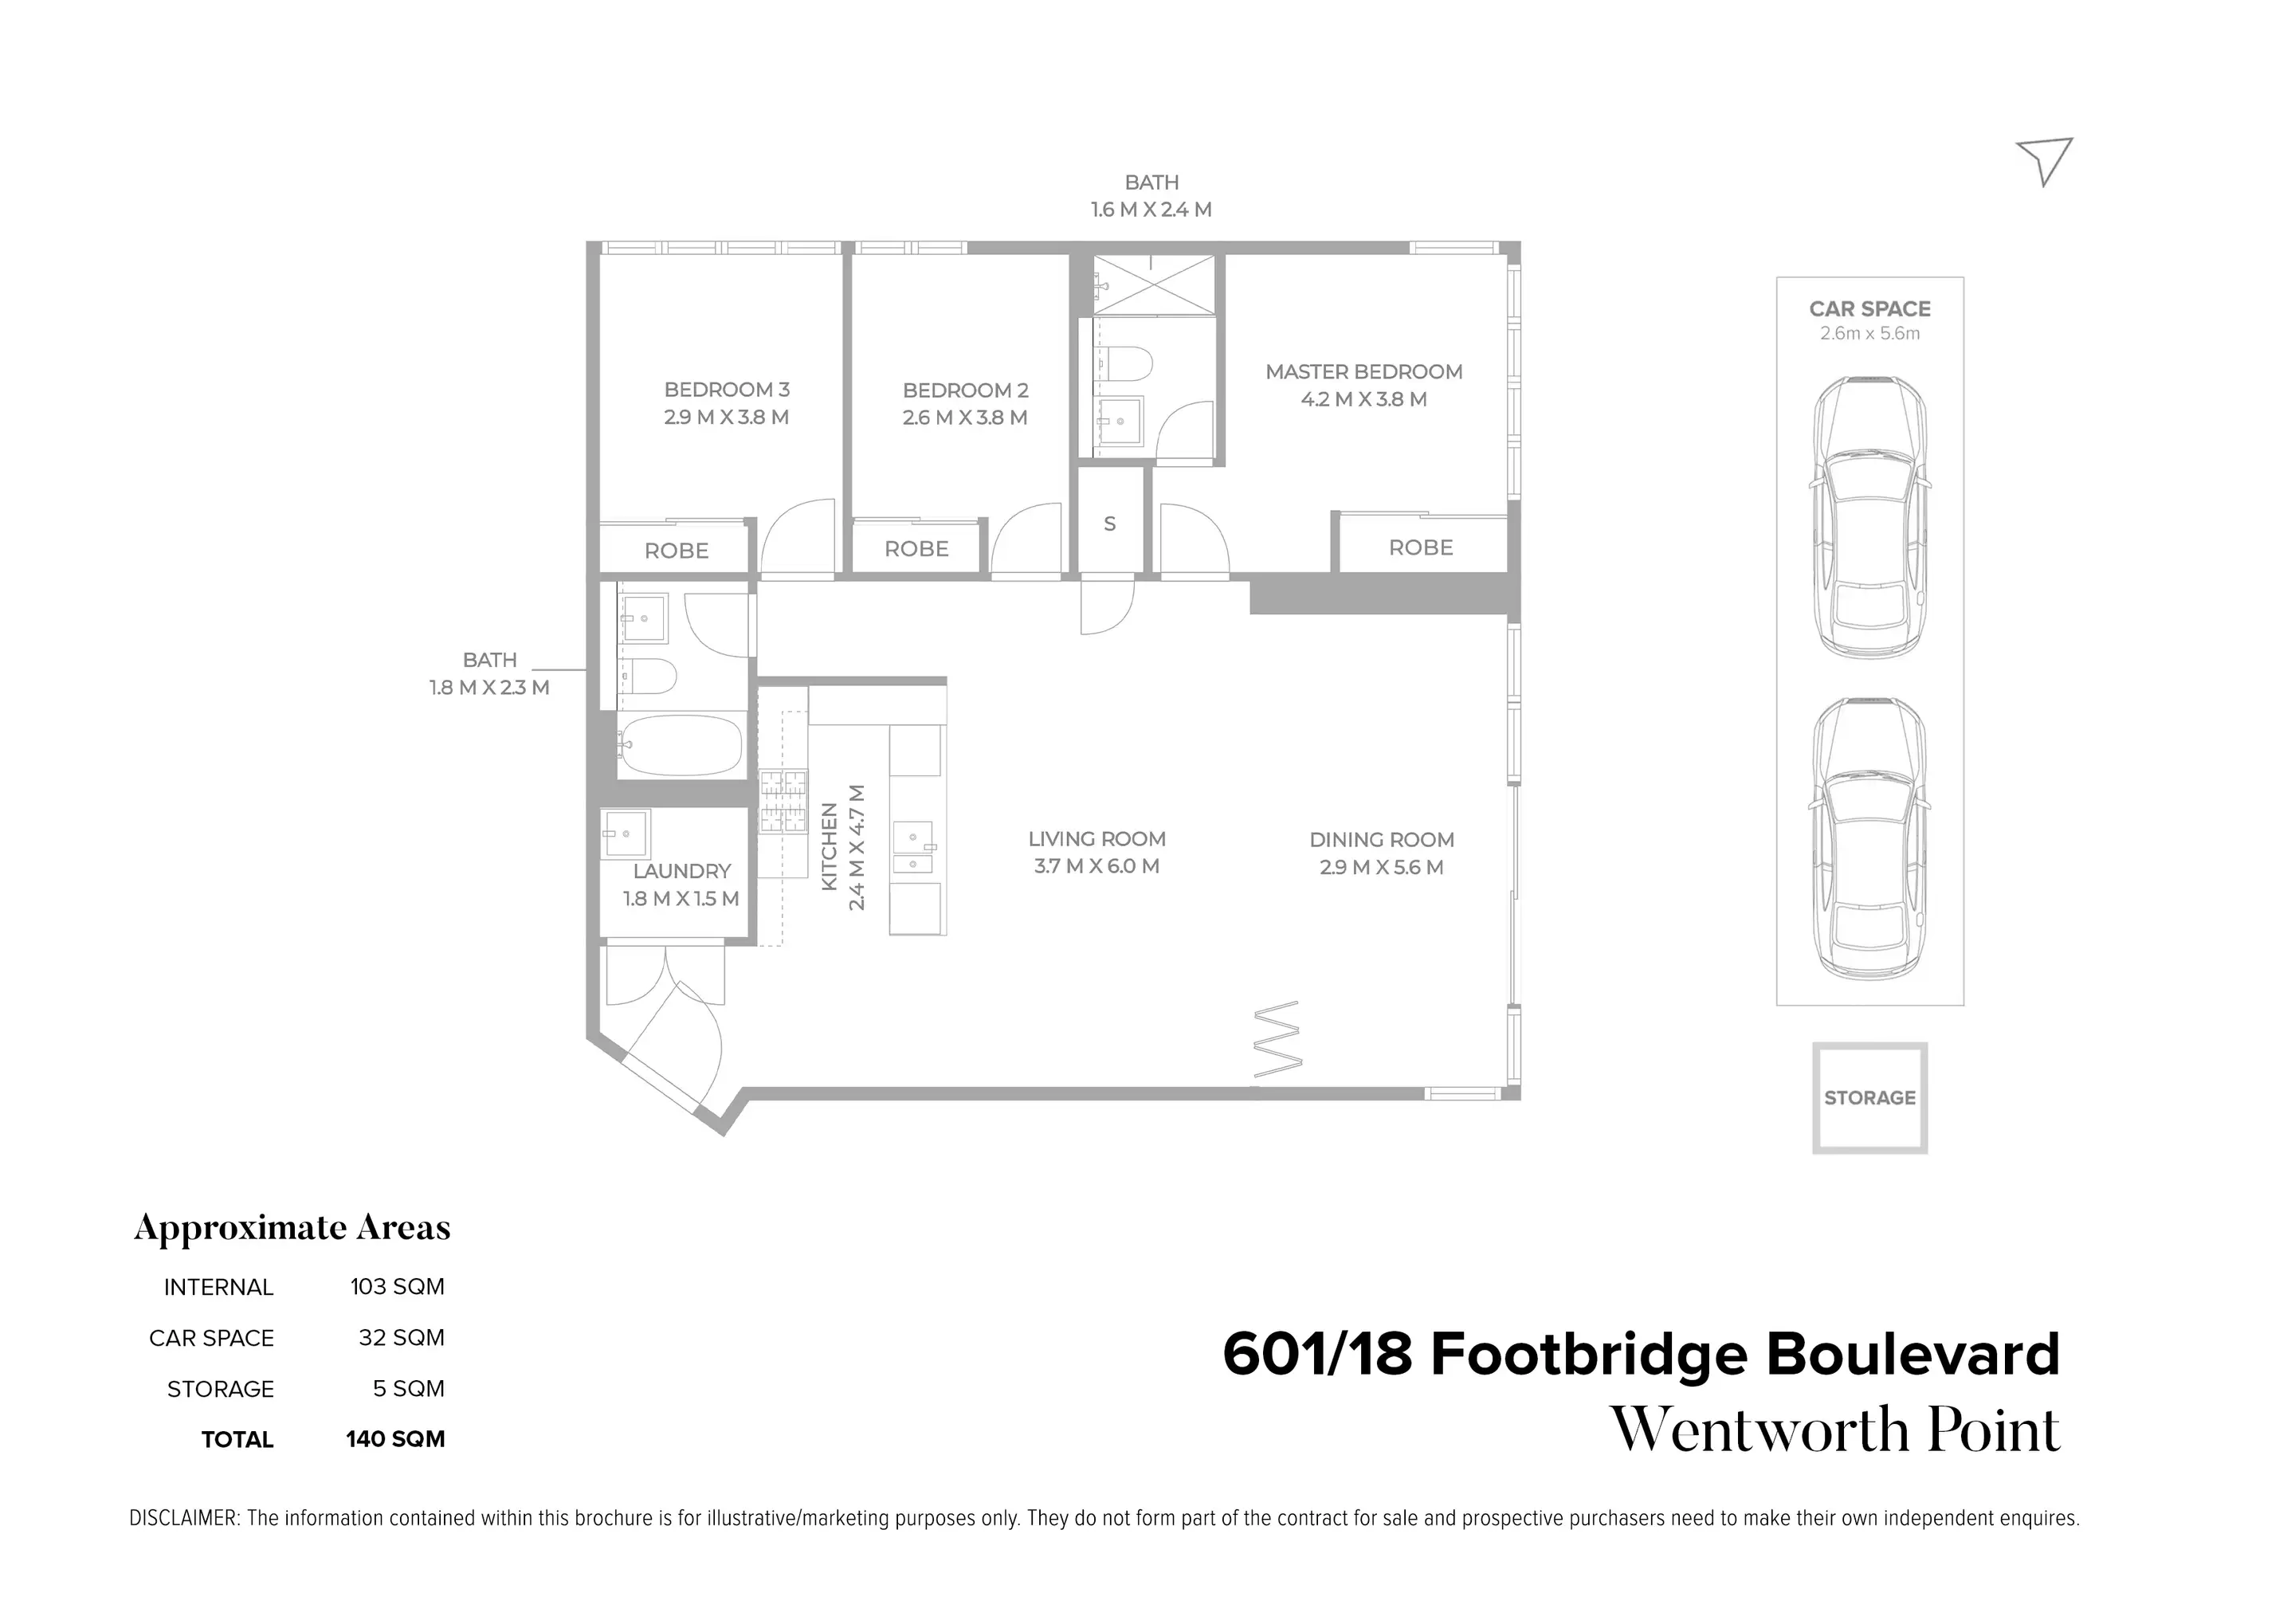 601/18 Footbridge Boulevard, Wentworth Point Sold by Chidiac Realty - floorplan